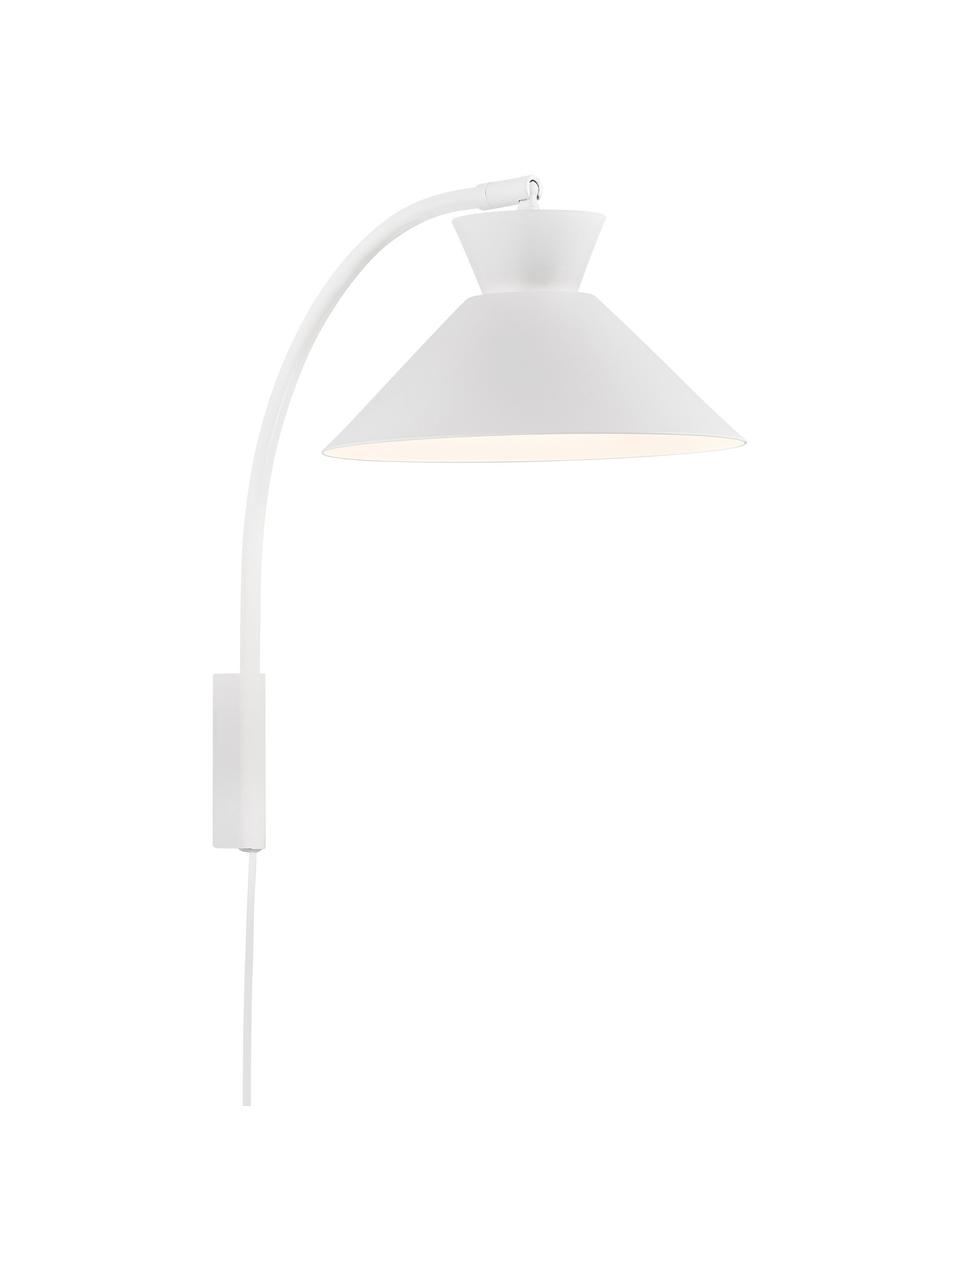 Nástěnné svítidlo se zástrčkou Dial, Bílá, Ø 25 cm, V 40 cm